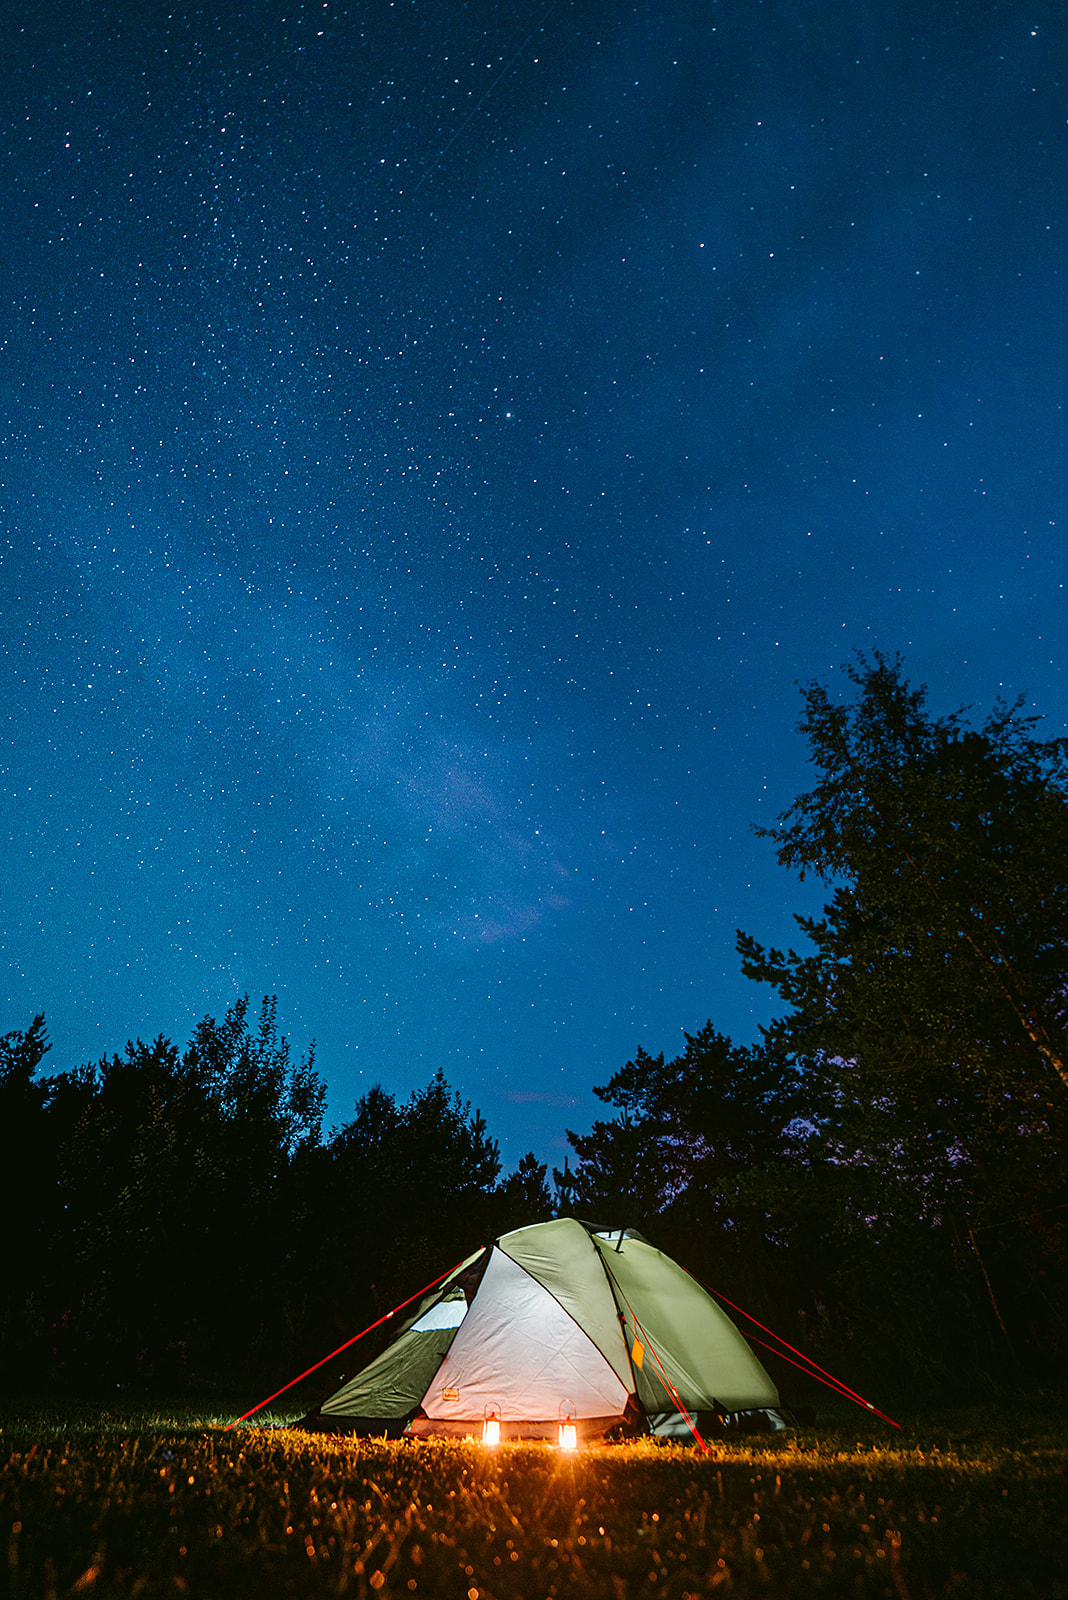 Illuminated tent under a starry night sky